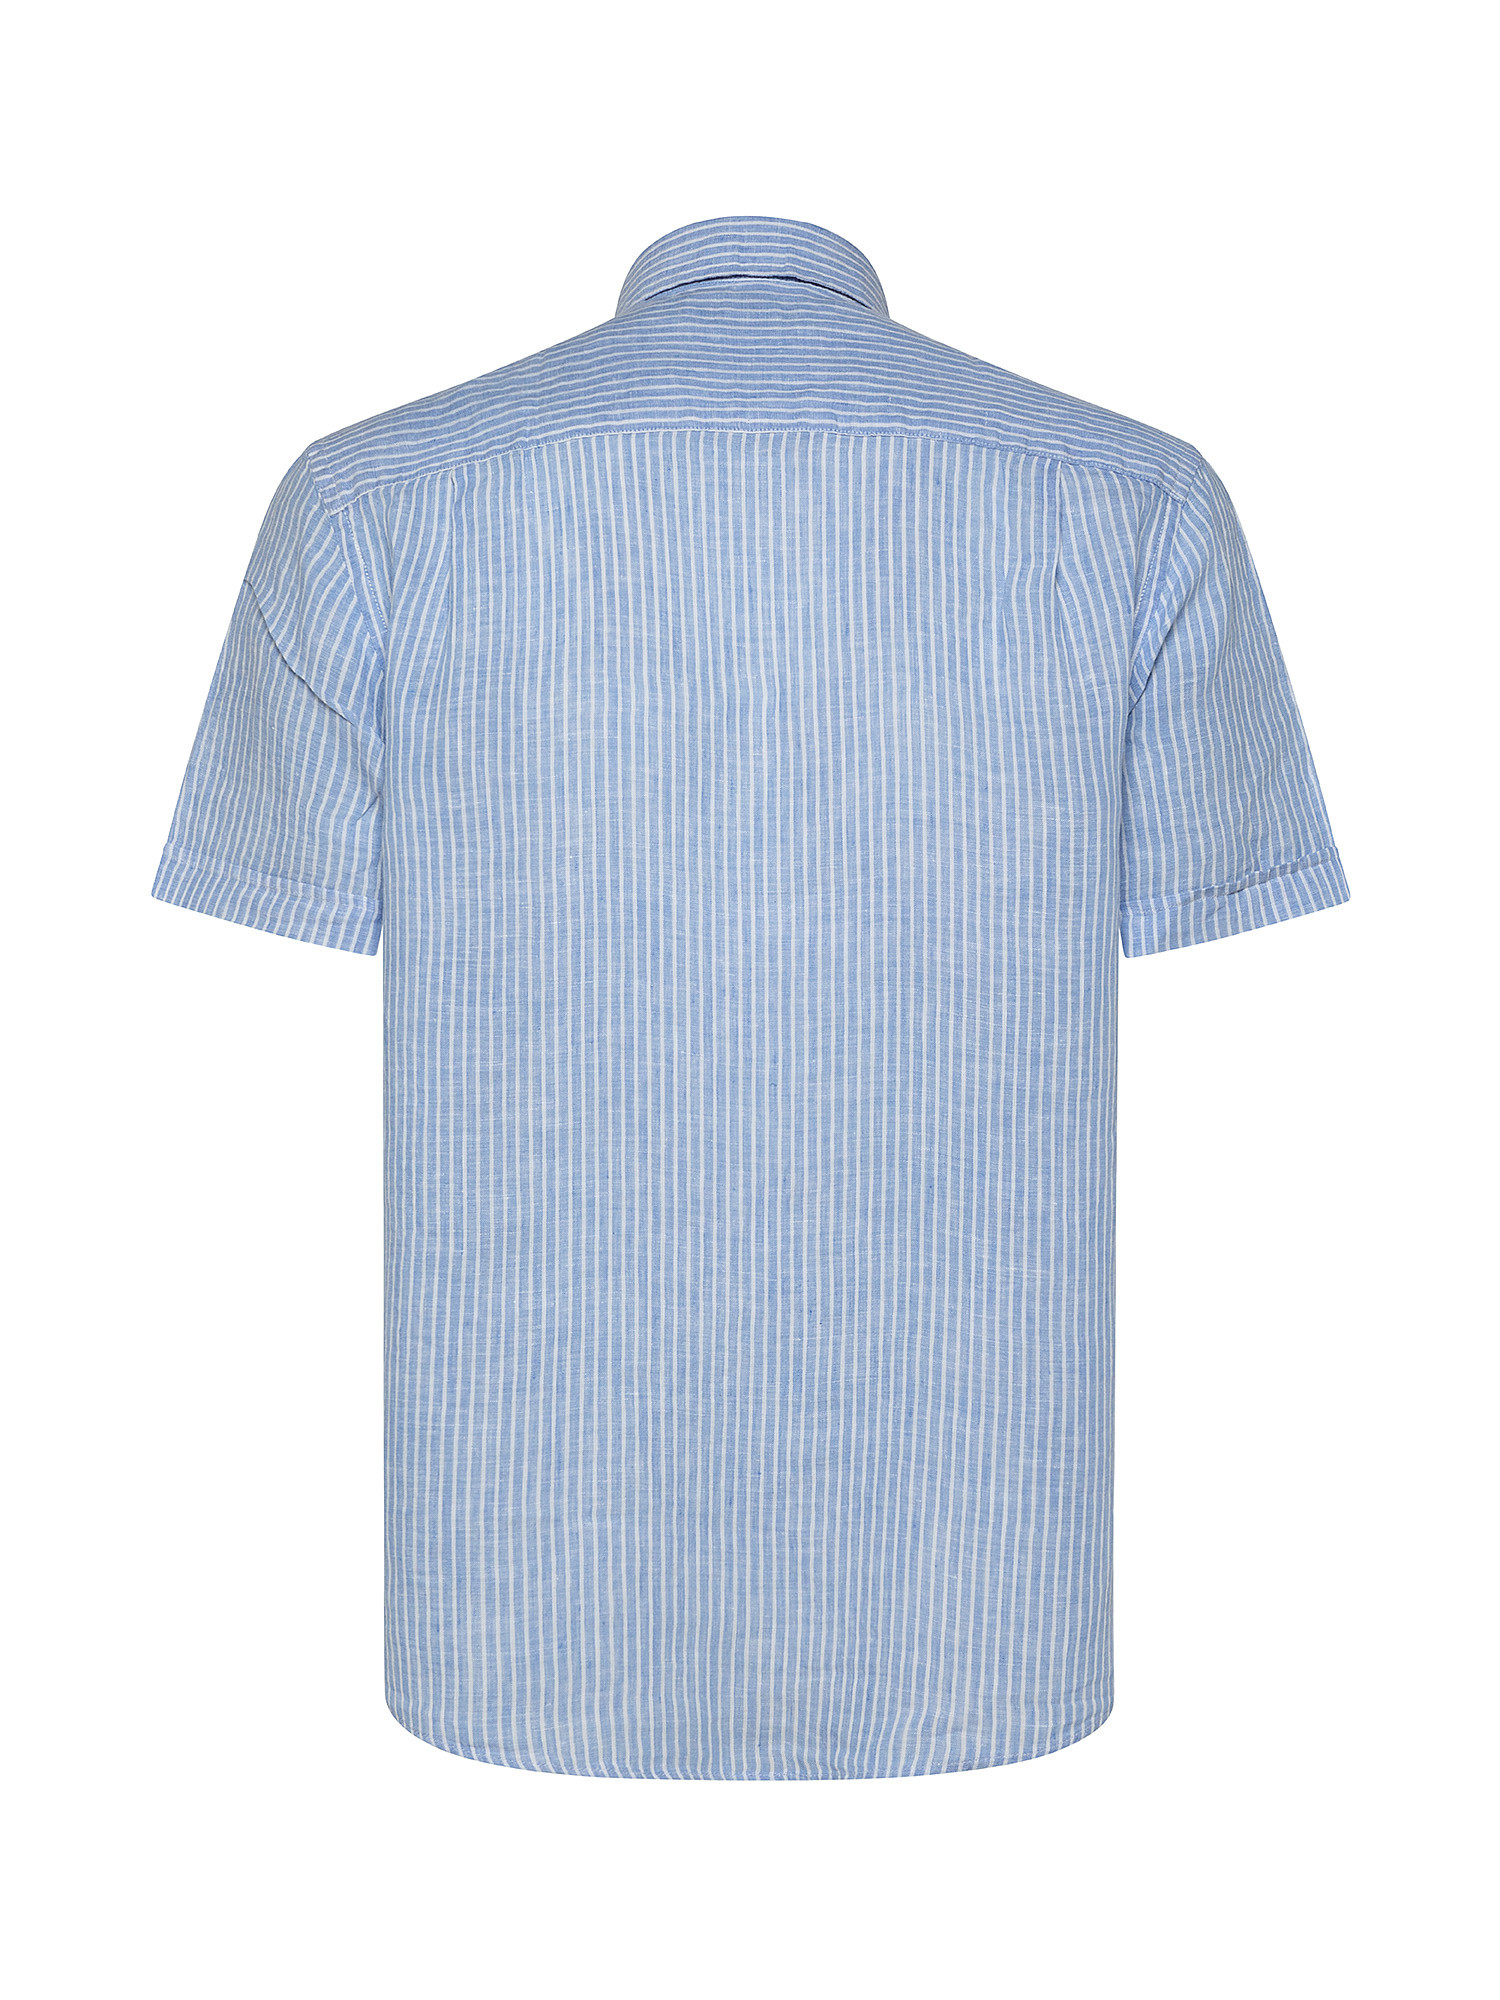 Camicia regular fit a righe in lino, Azzurro, large